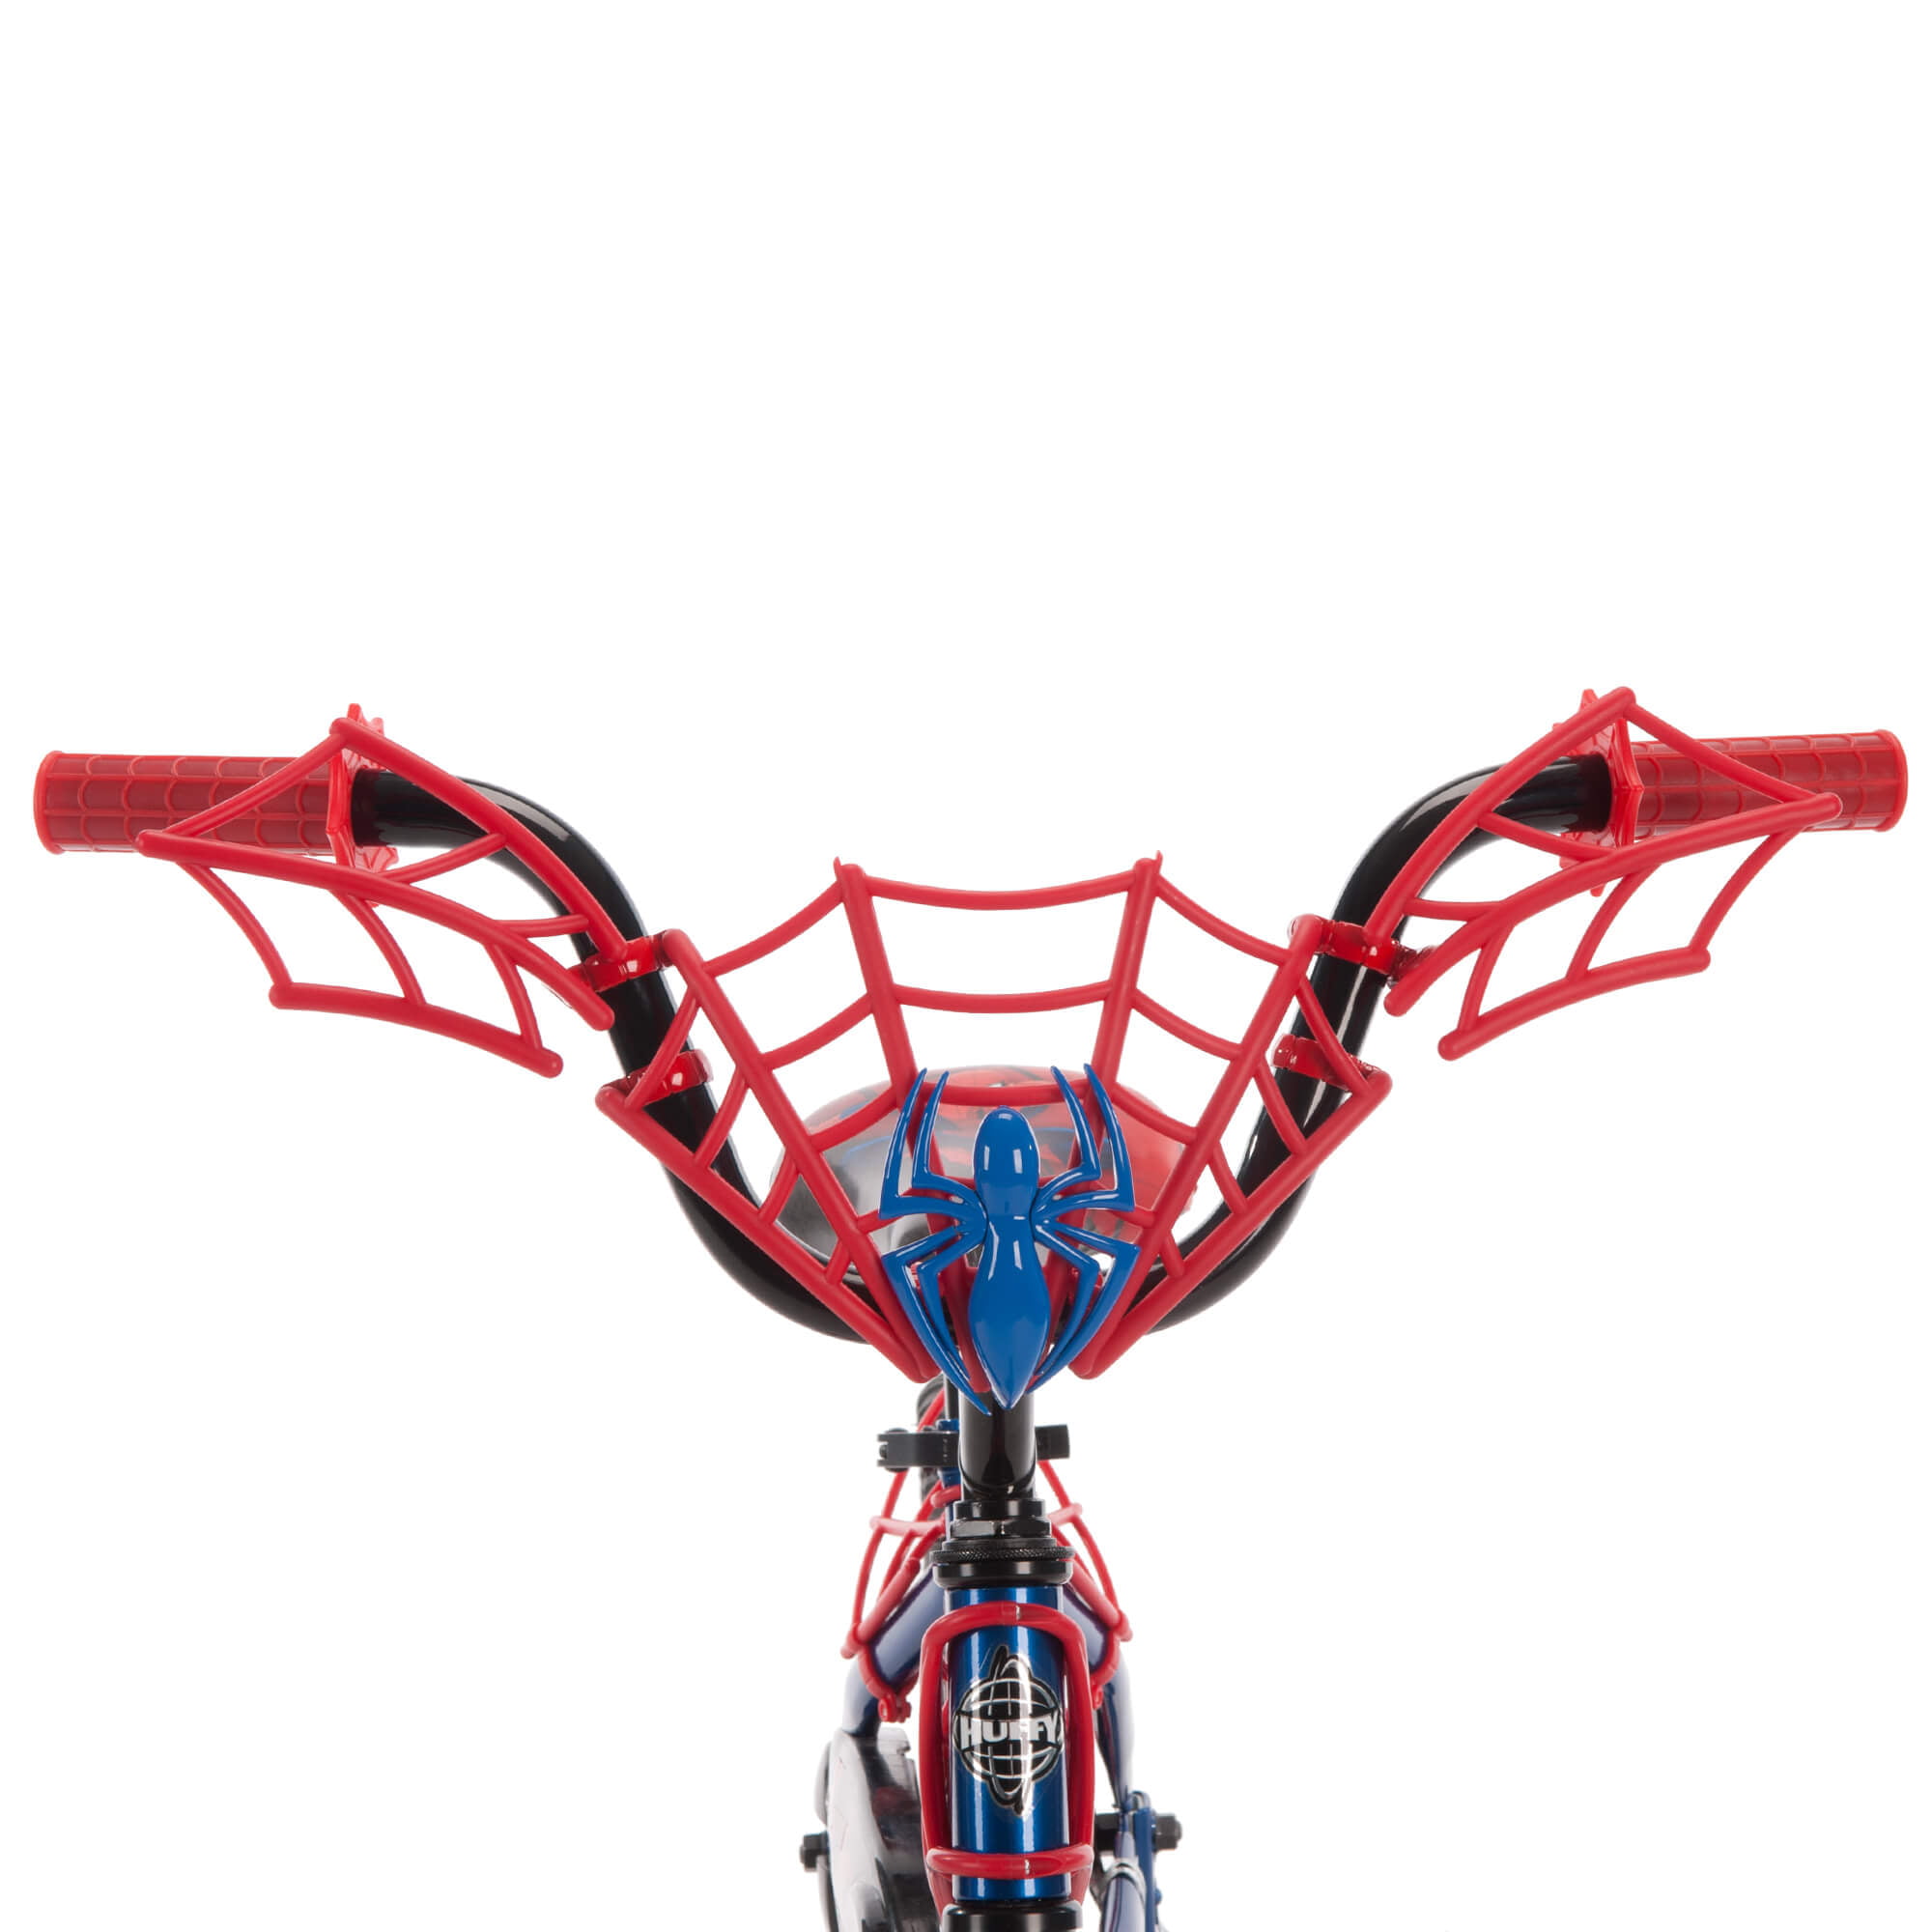 spiderman bike 16 inch walmart